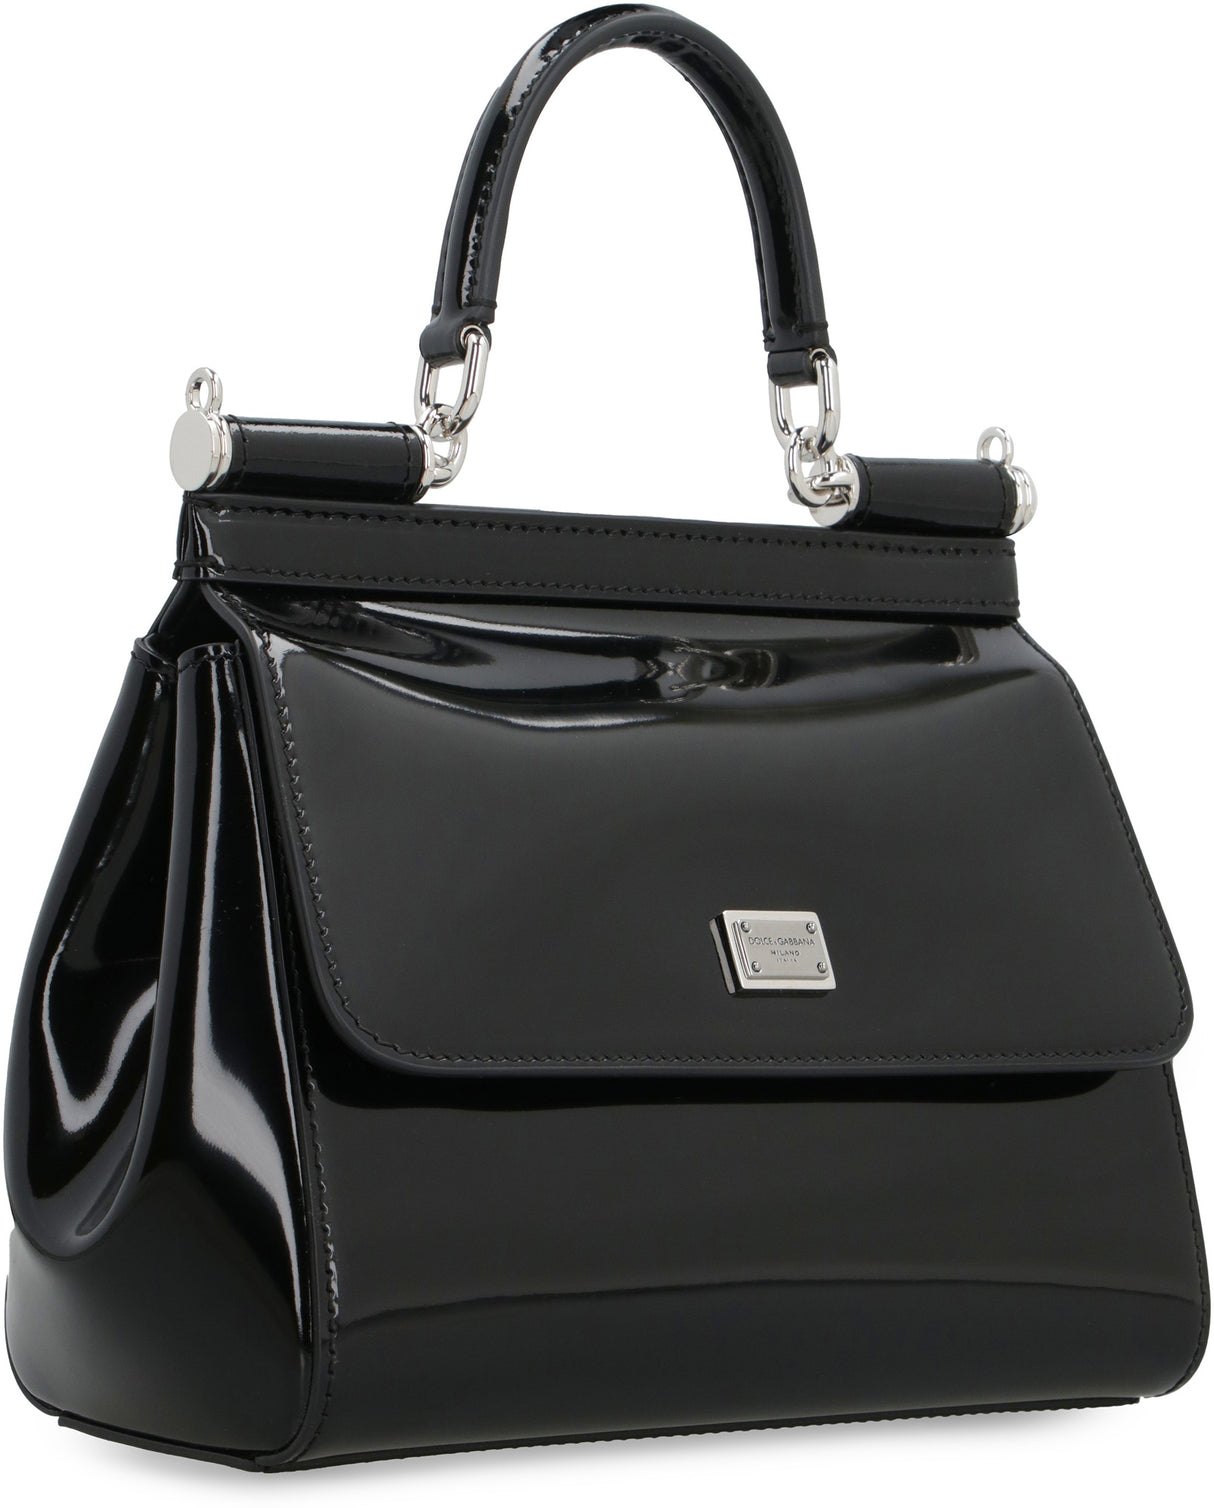 DOLCE & GABBANA Stylish Black Patent Leather Handbag for Women